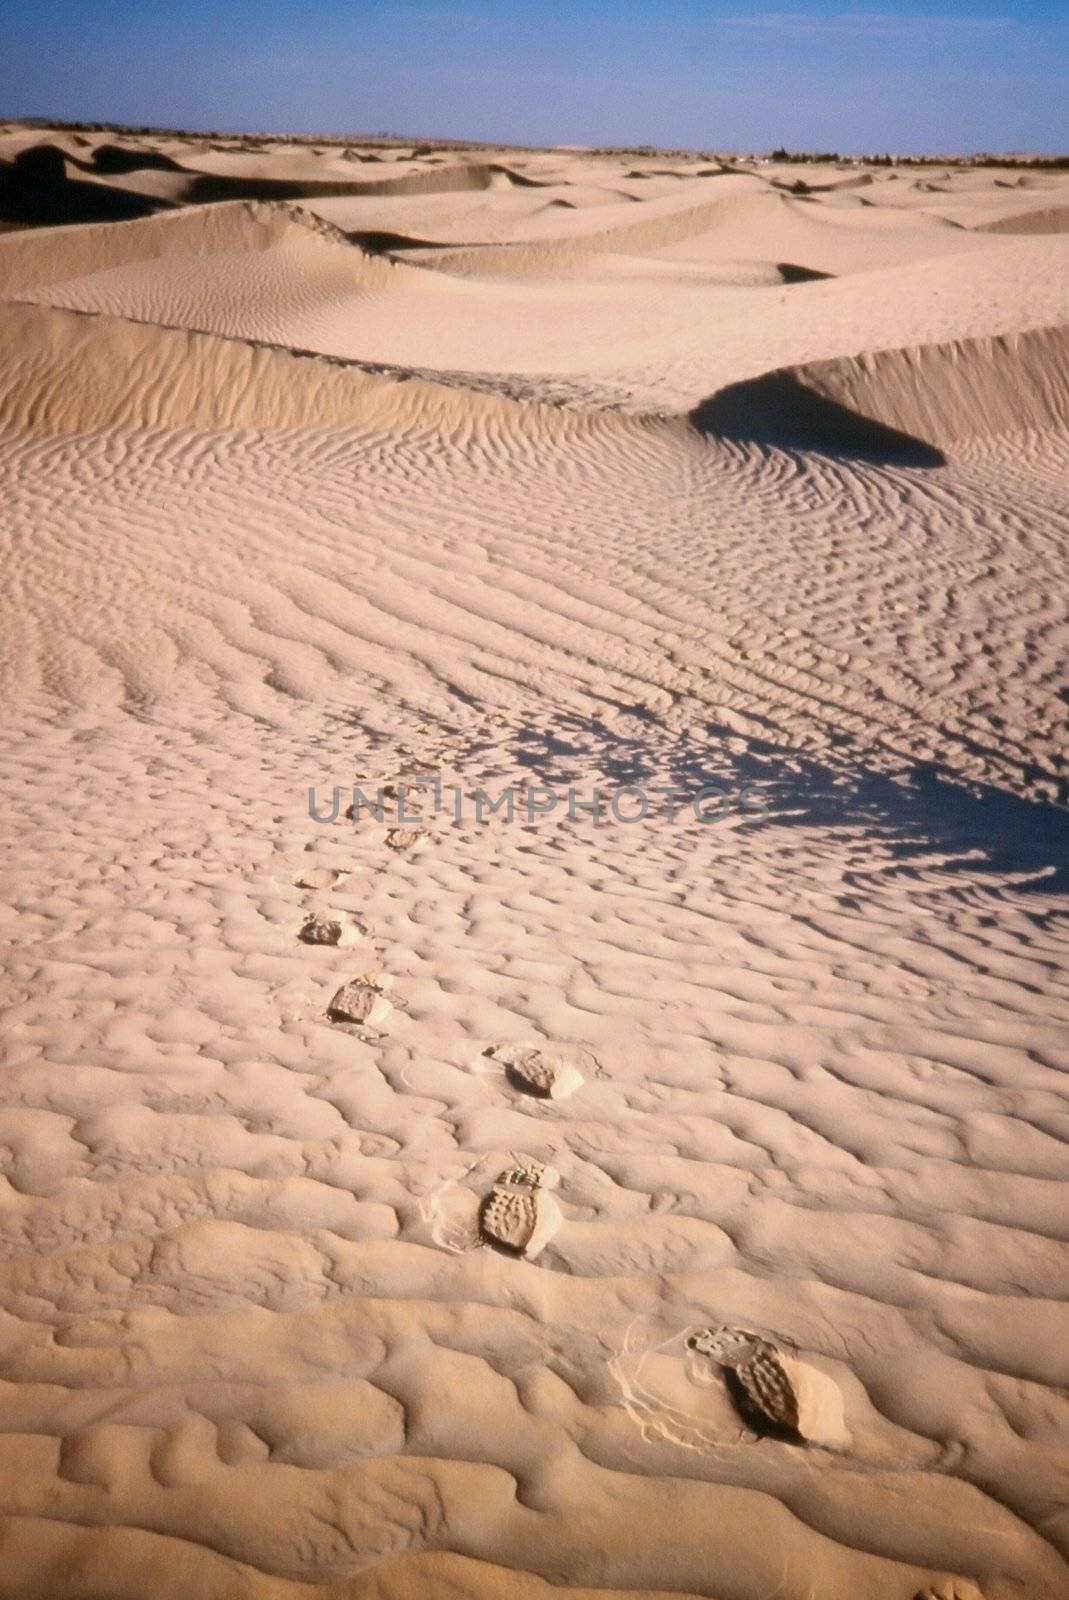 Footprints on desert sand by sil